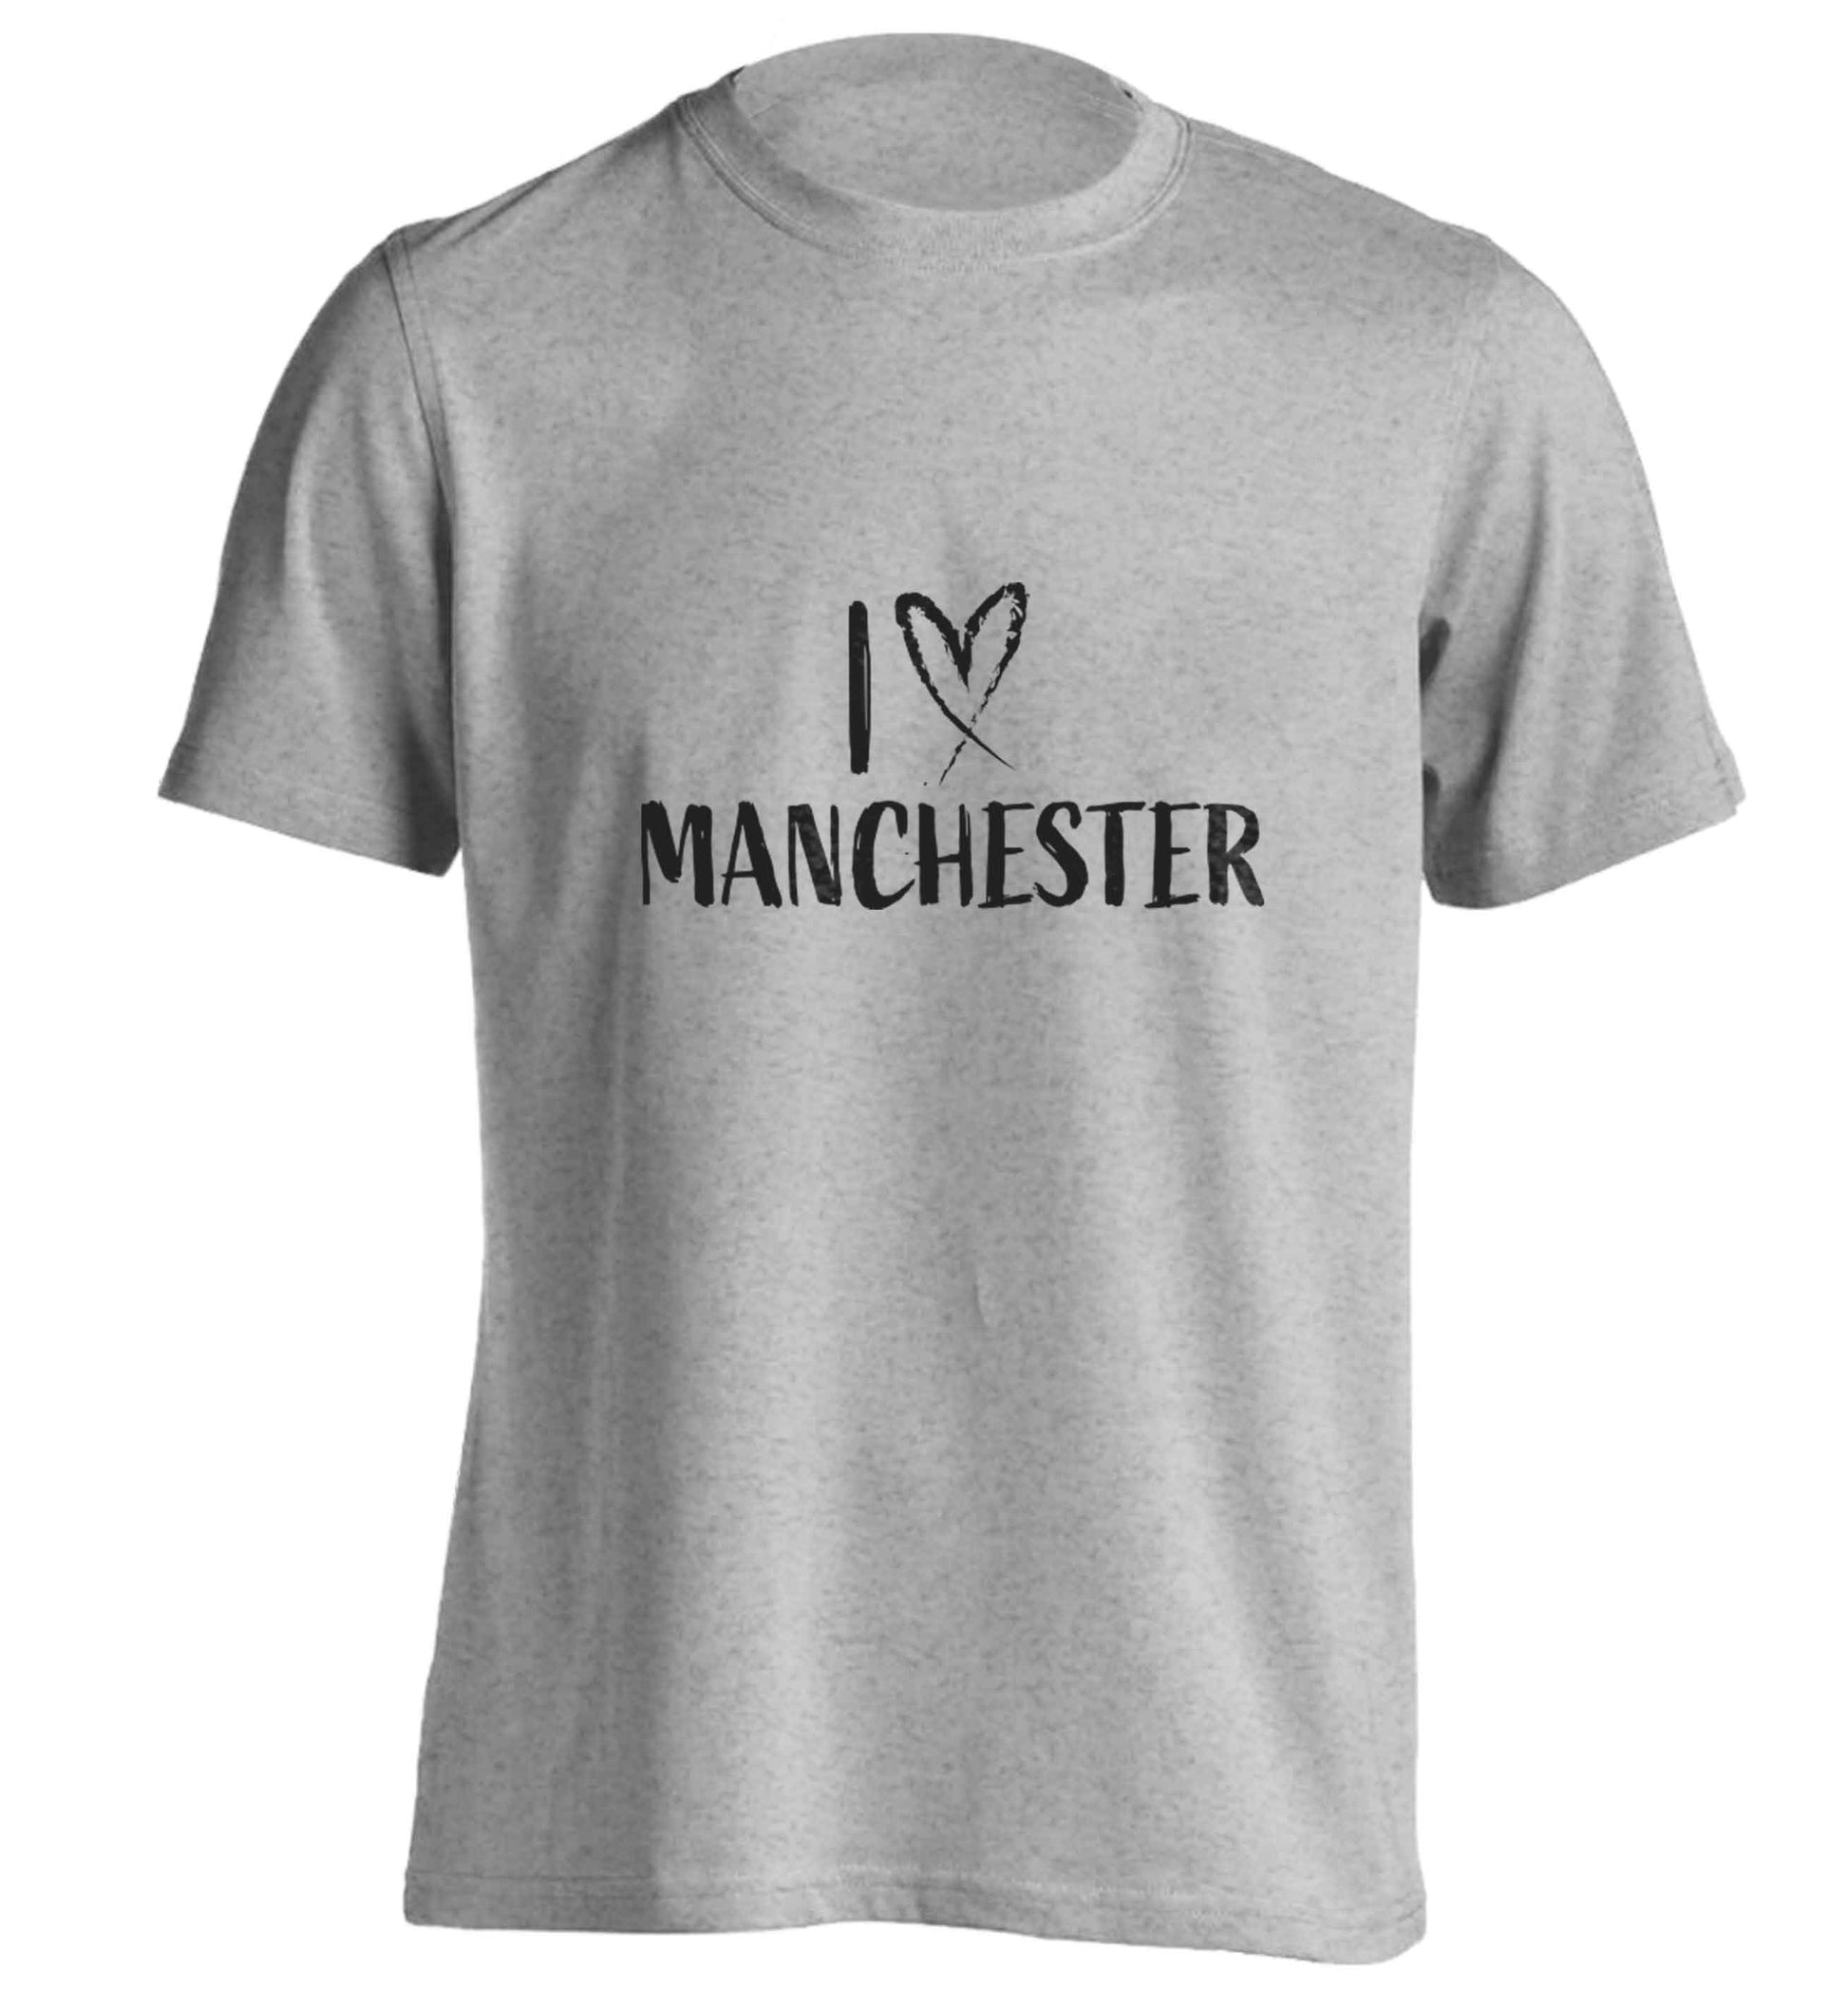 I love Manchester adults unisex grey Tshirt 2XL